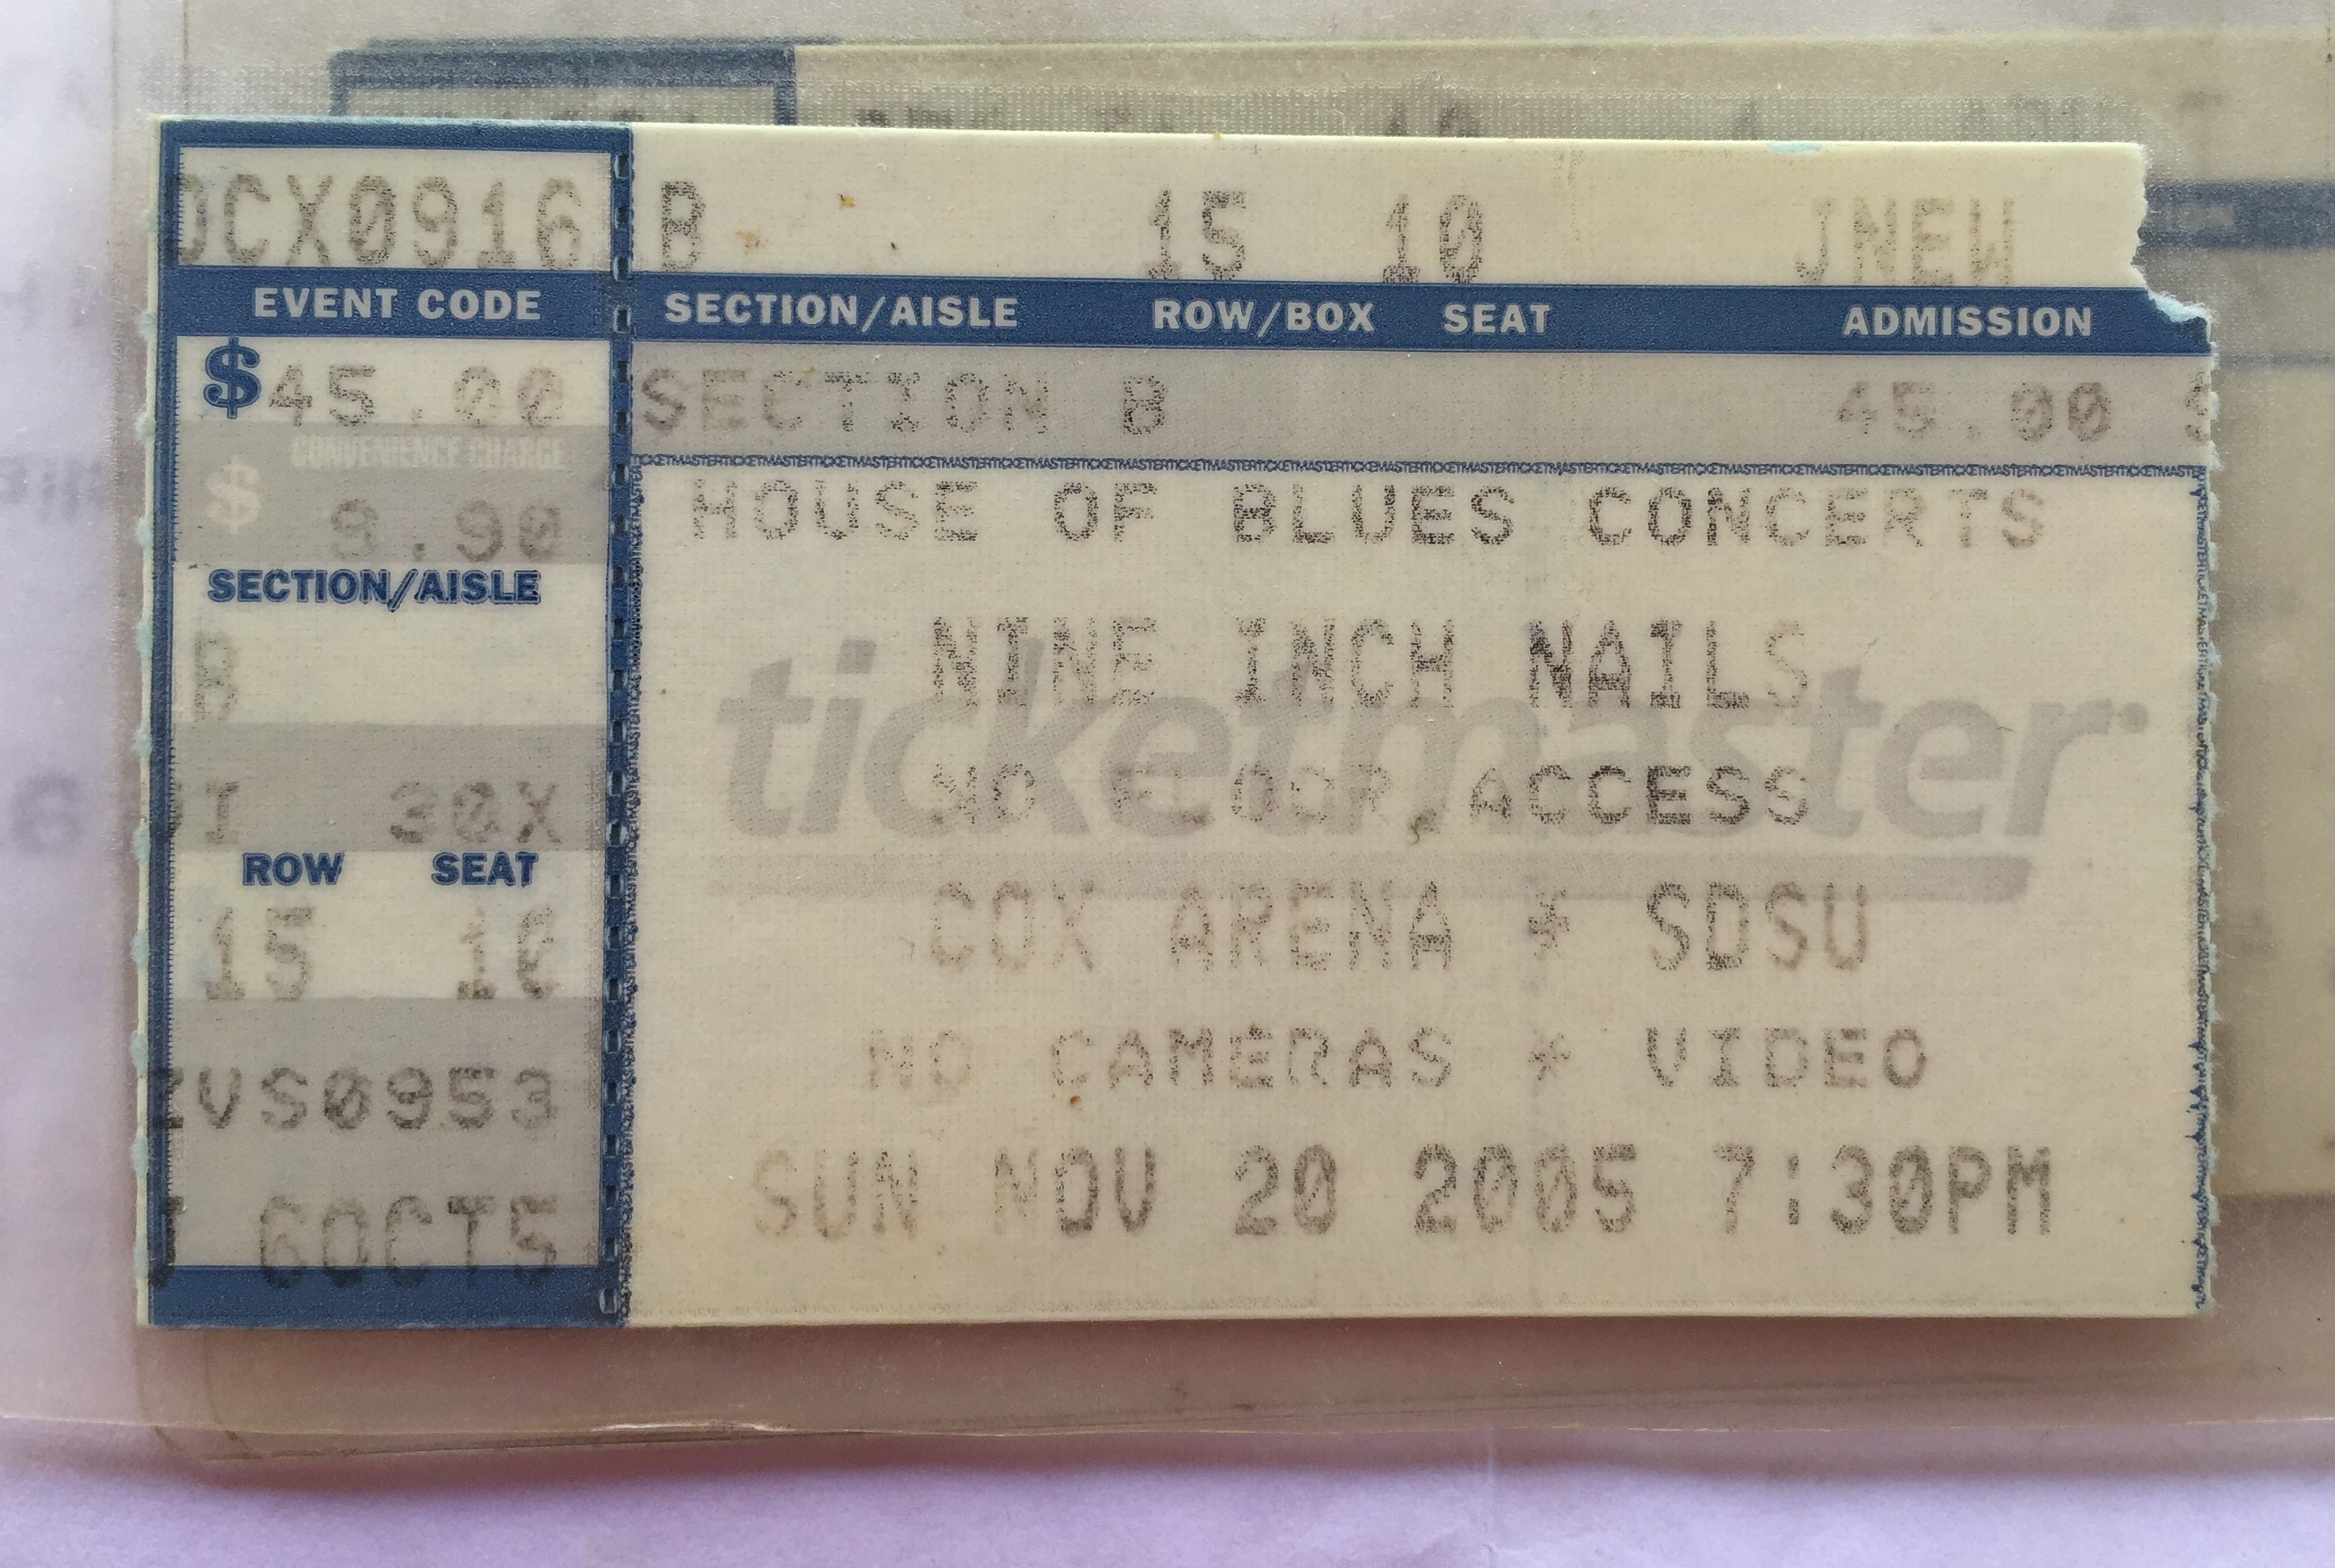 2005/11/20 Ticket